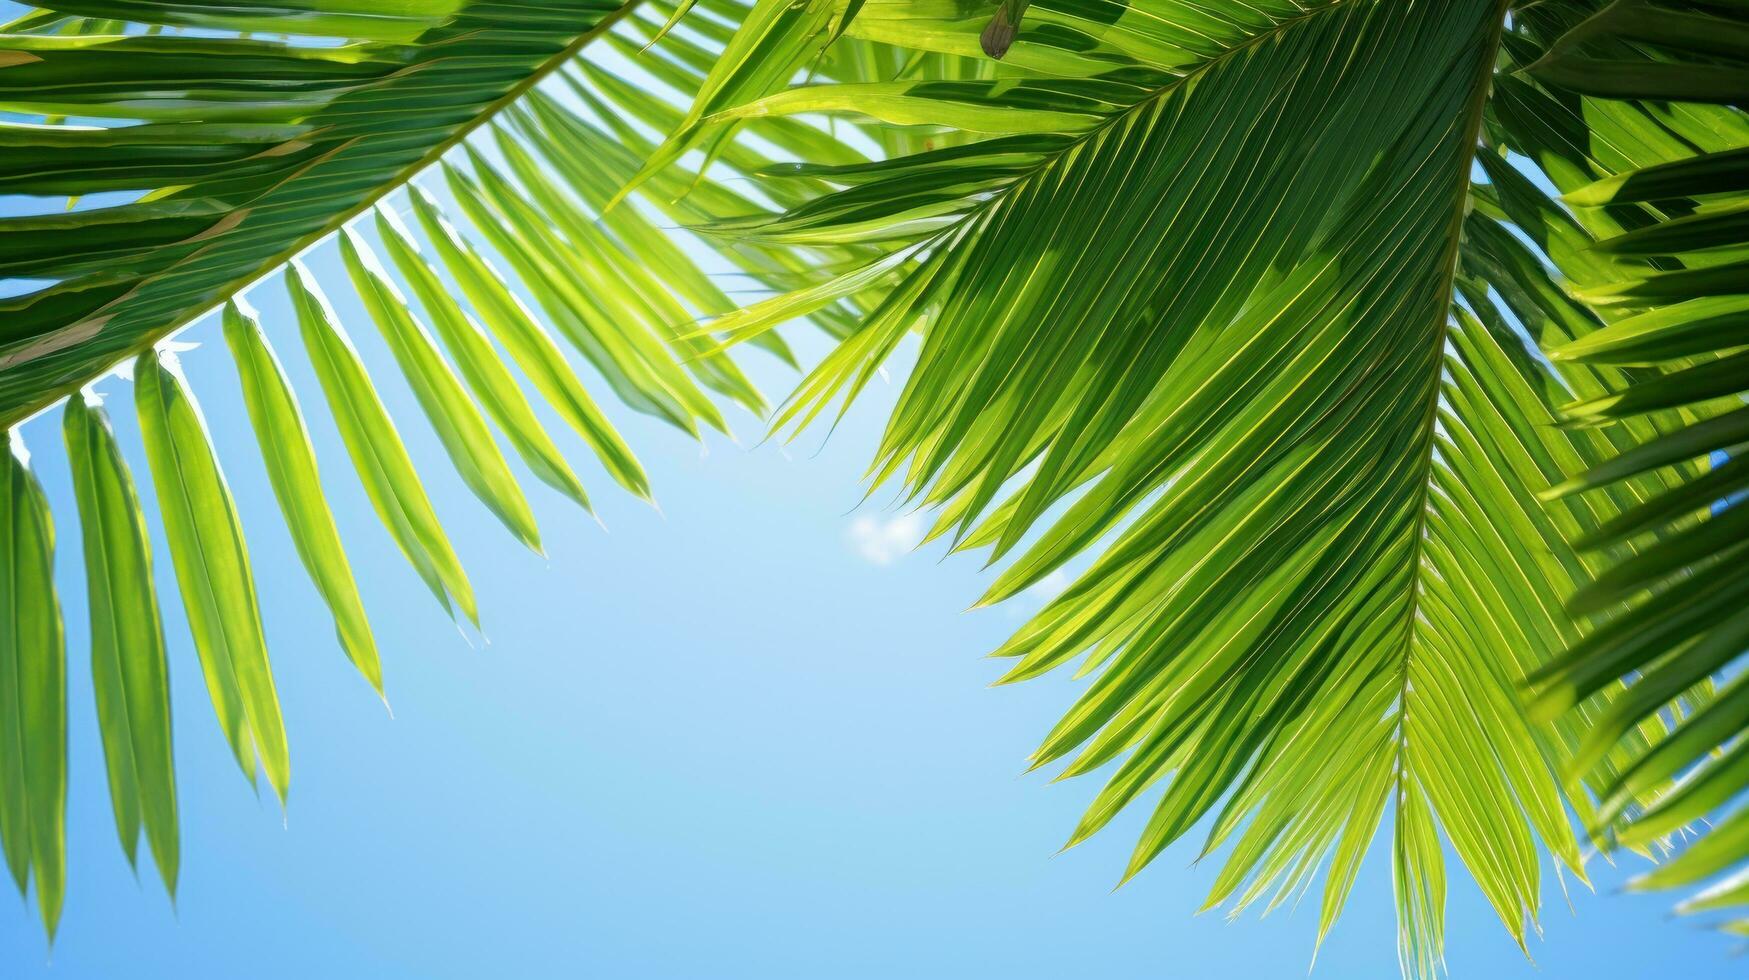 vivace verde palma le foglie contro blu cielo foto